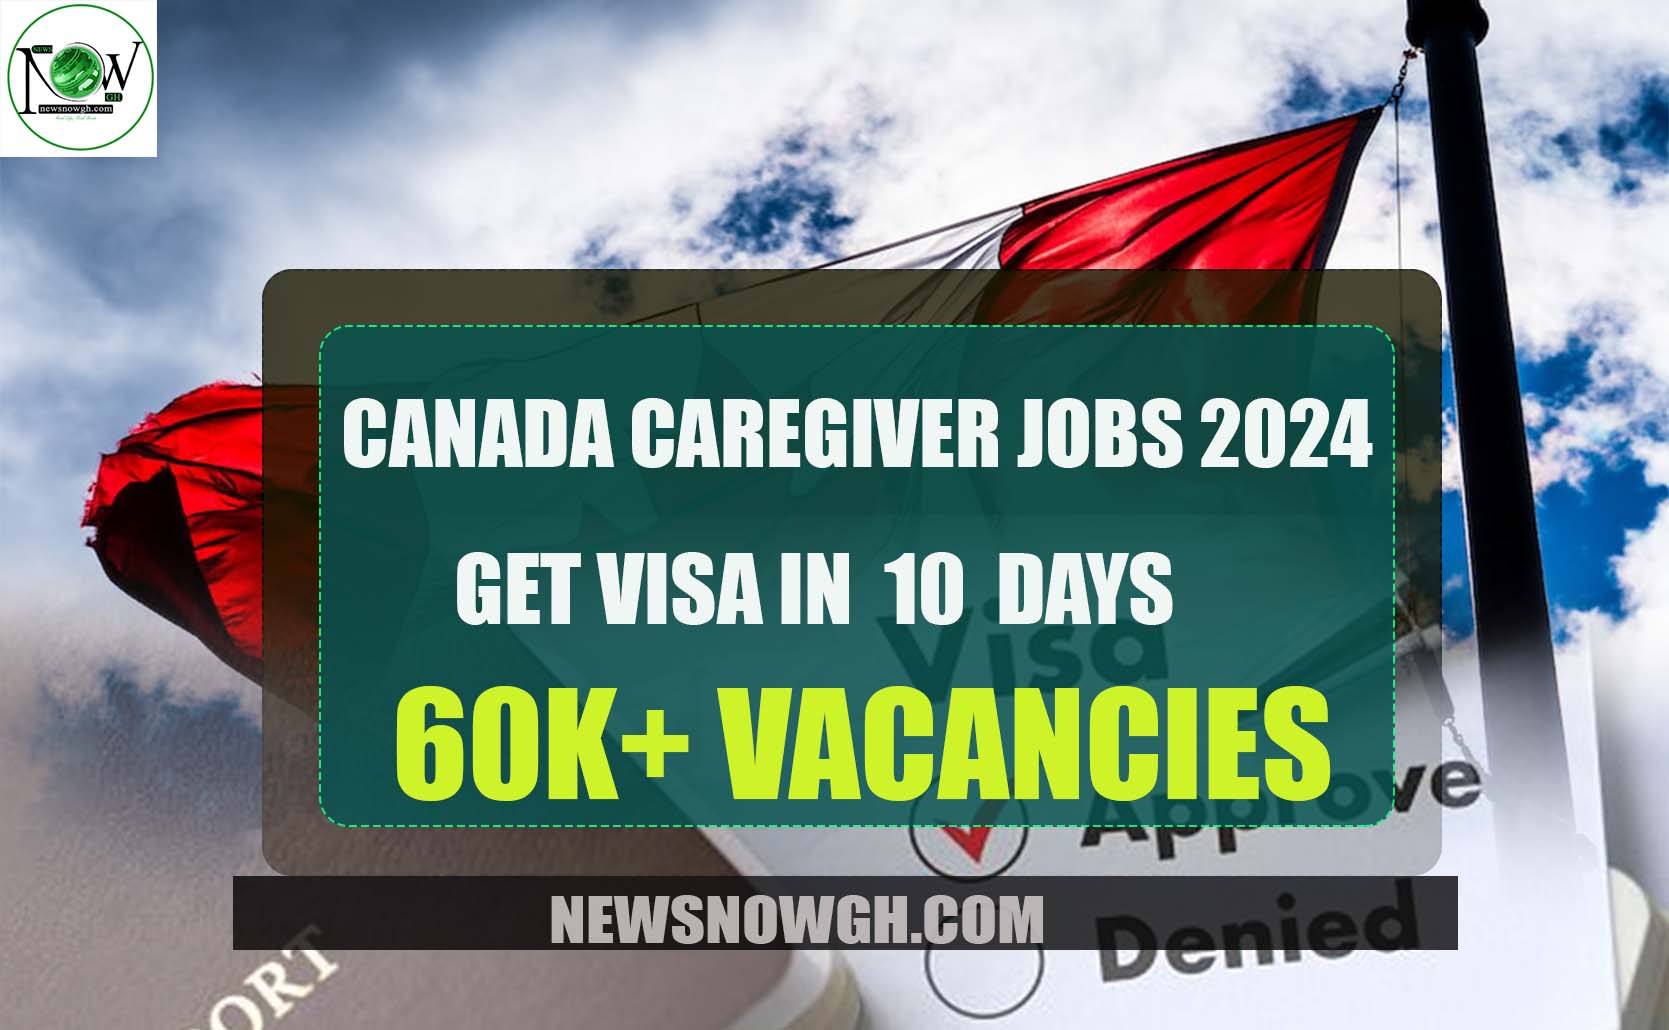 Canada Caregiver Jobs 2024 Visa in 10 Days 60k+ Vacancies